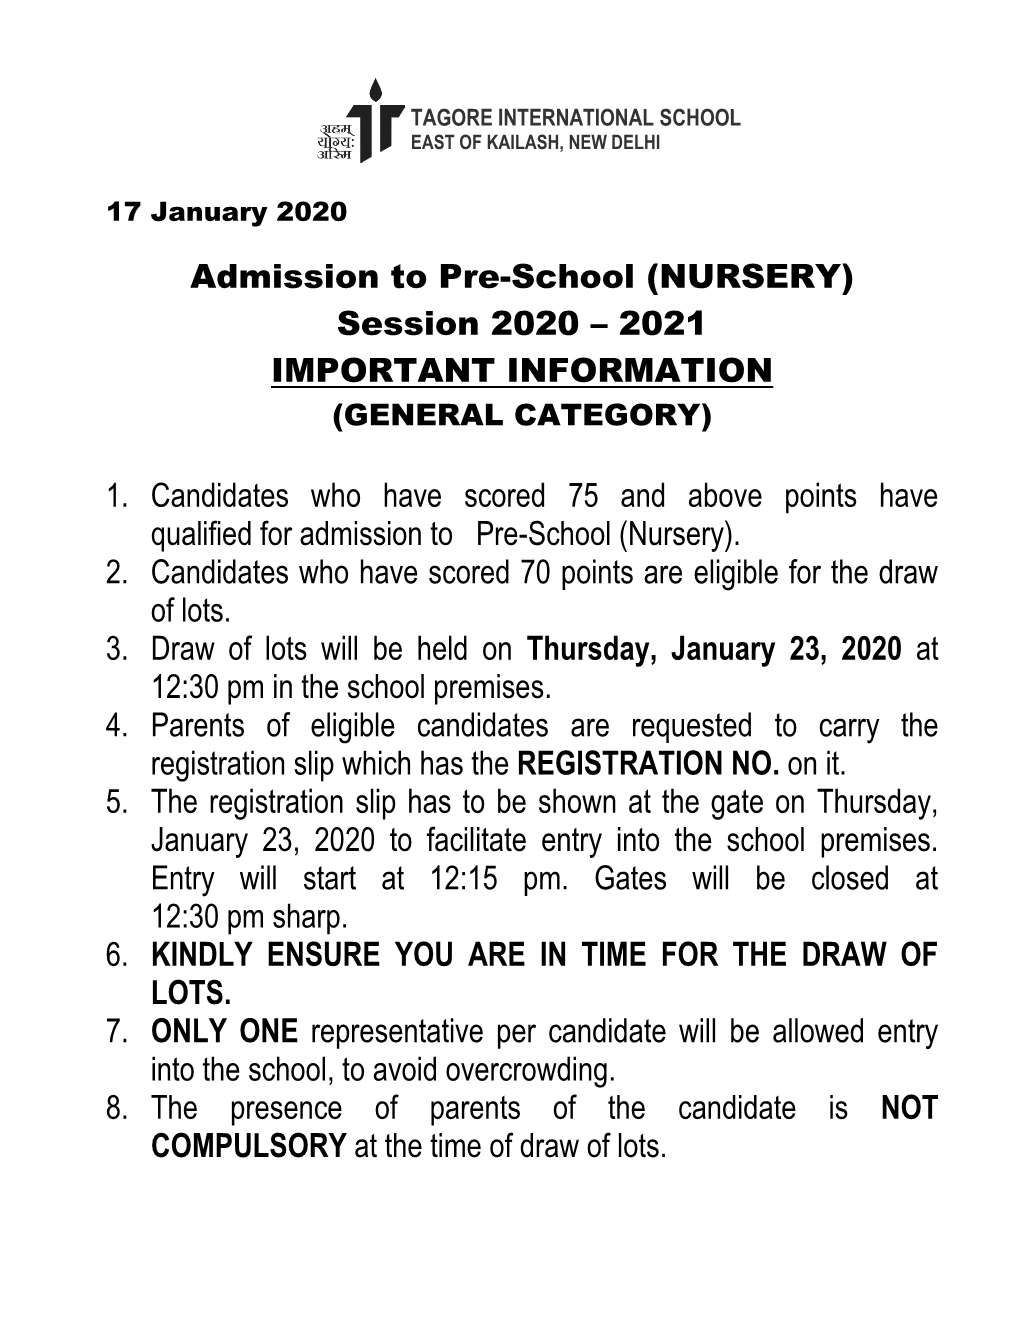 Admission to Pre-School (NURSERY) Session 2020